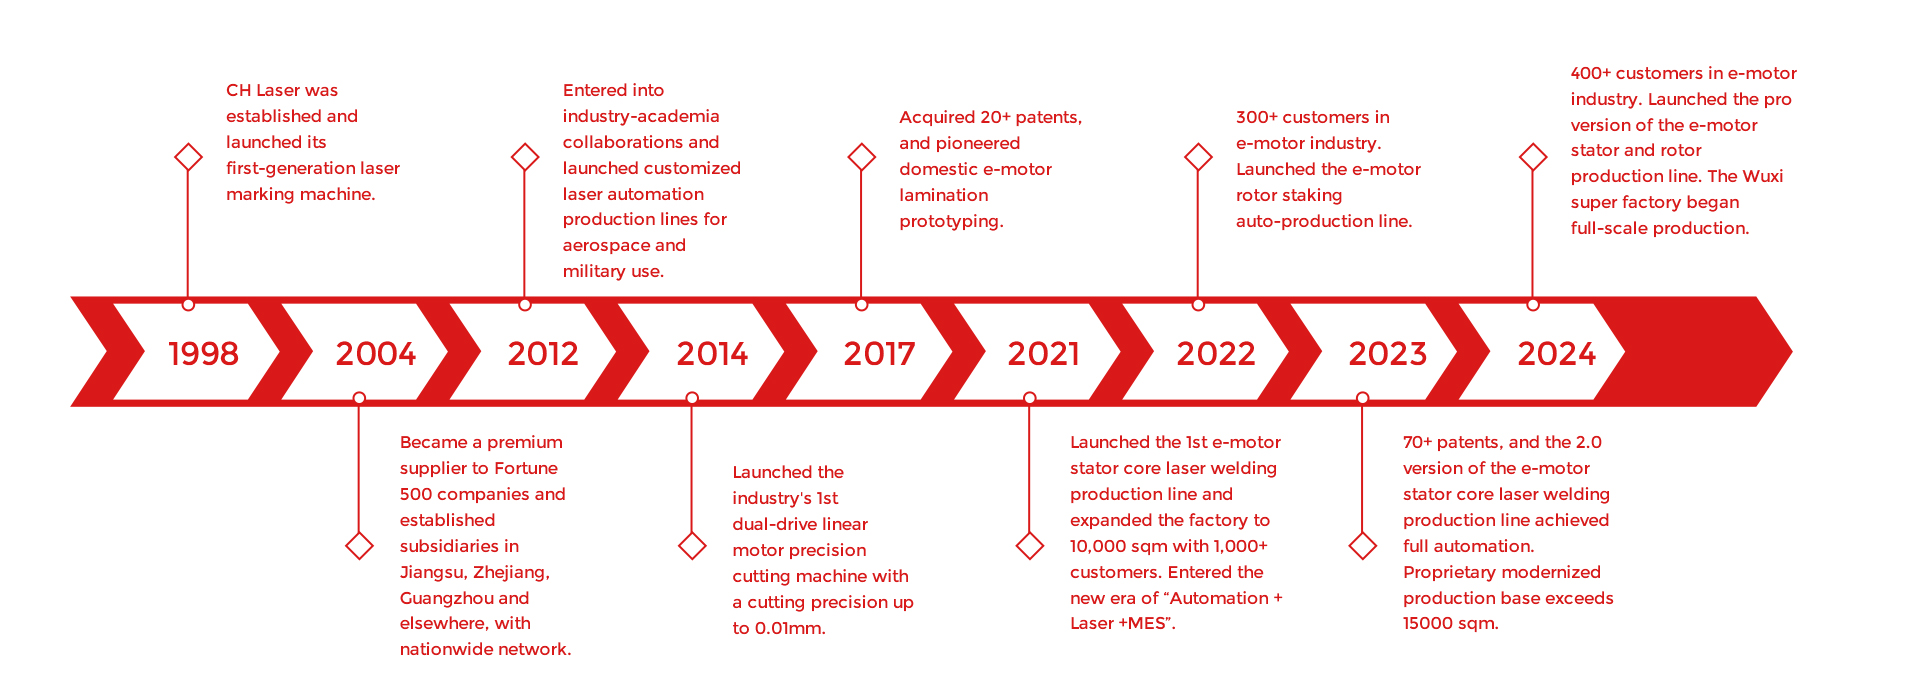 CH Laser Development Timeline